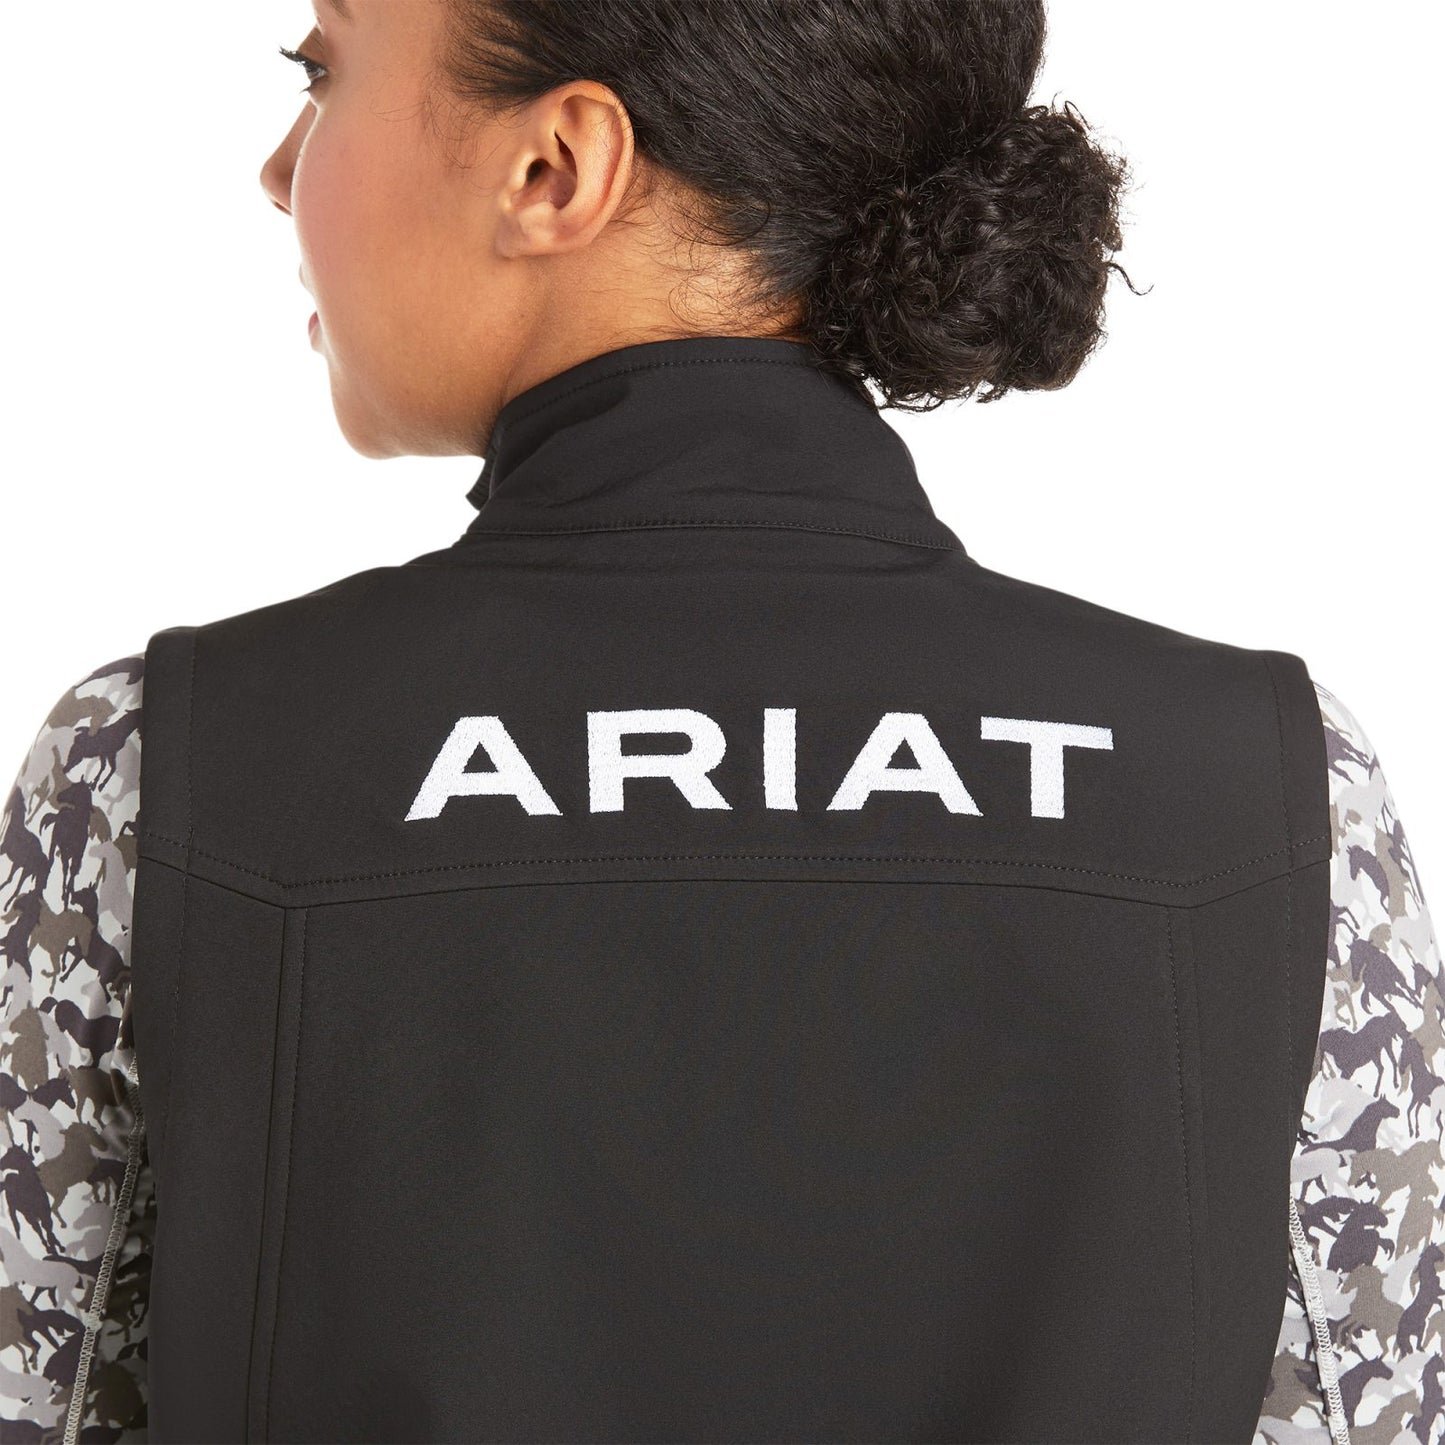 Ariat Team Black Softshell Vest